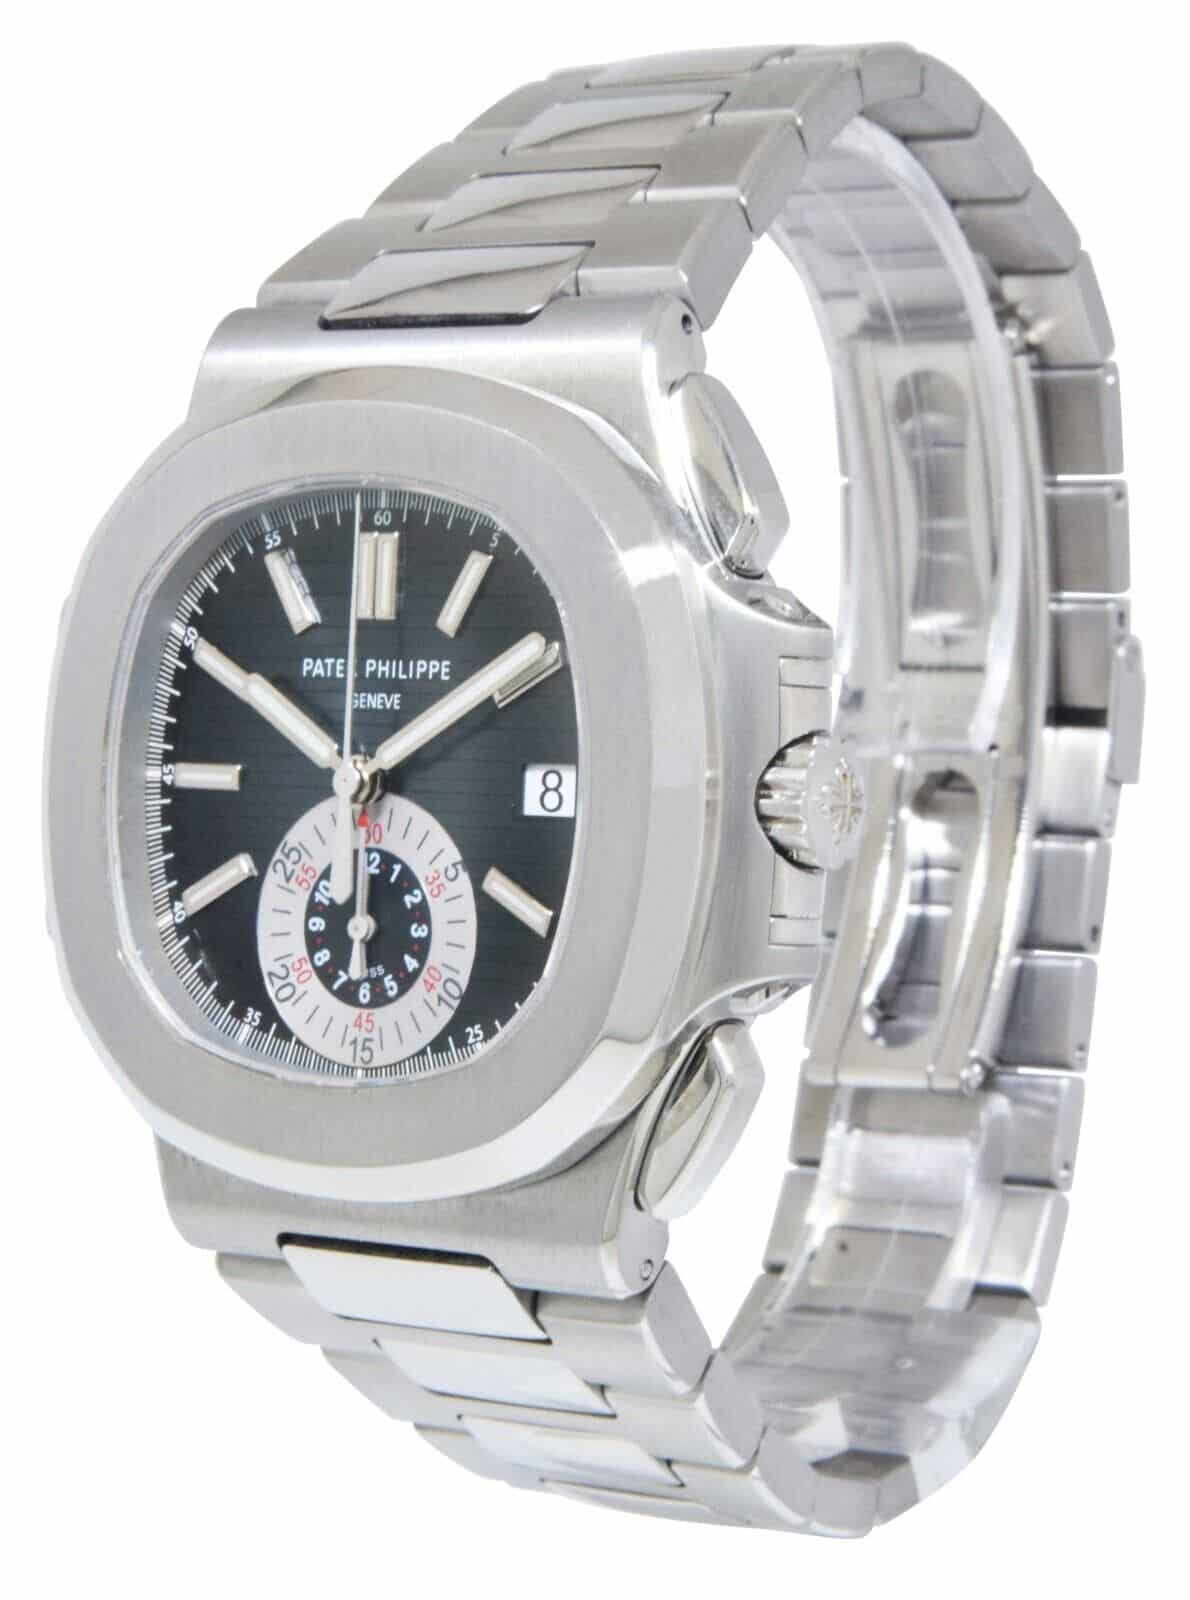 Patek Philippe Nautilus 5980 Chronograph Steel Blue Dial Watch B/P '13 5980/1A